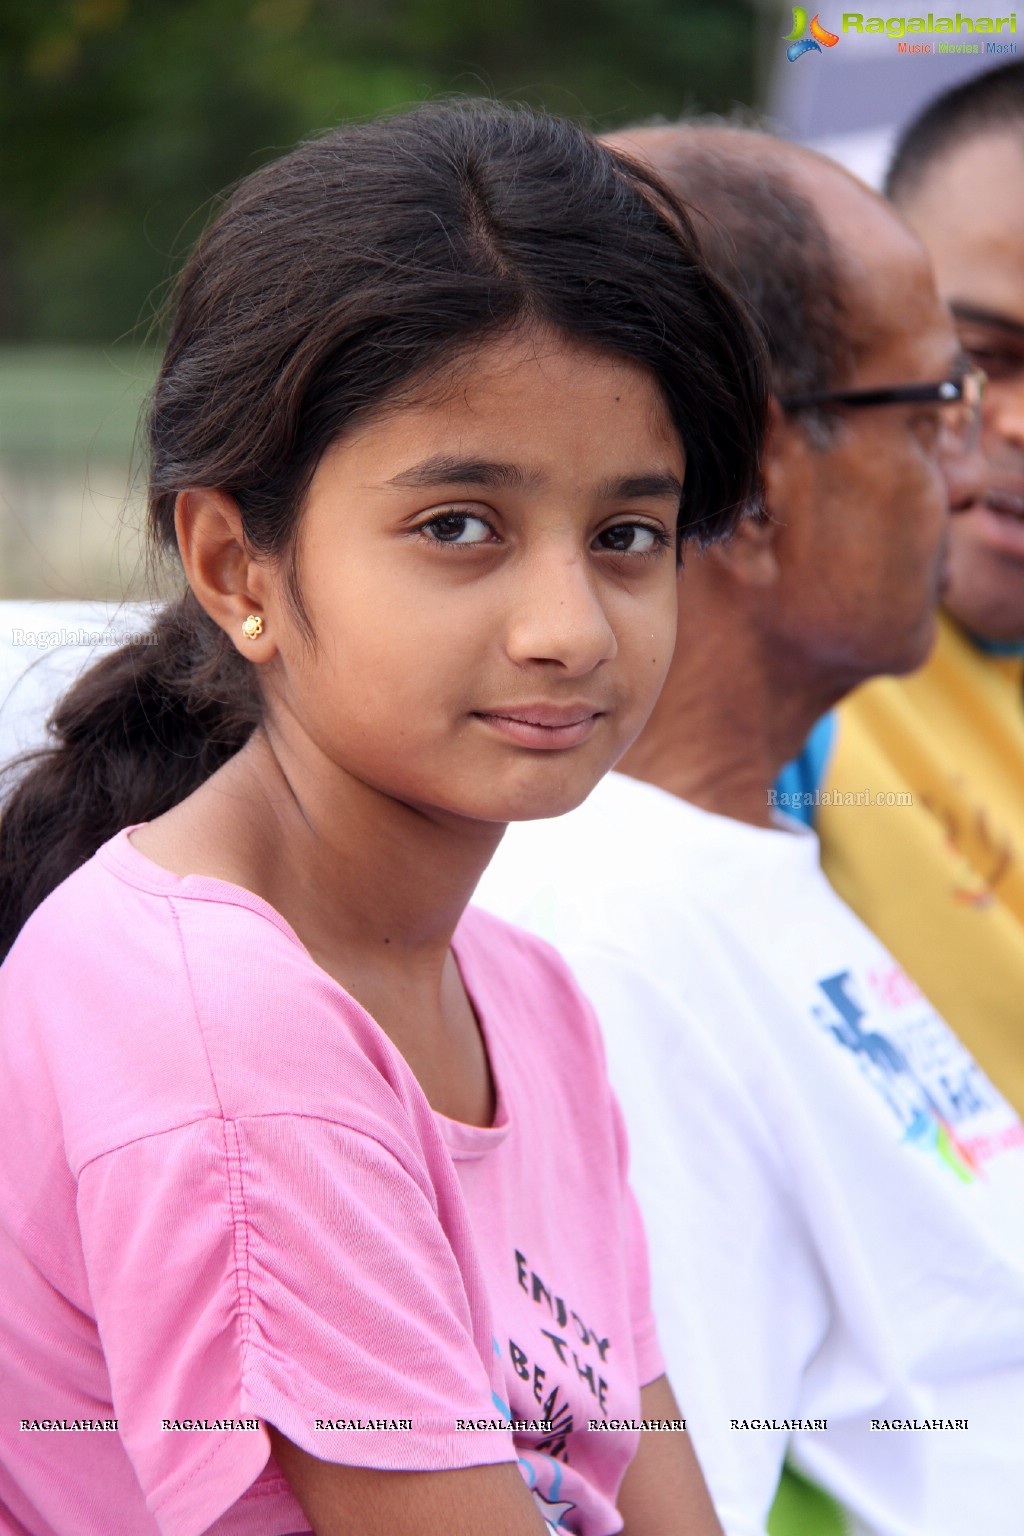 Cancer Awareness Walk by Aasya Health Foundation, Hyderabad